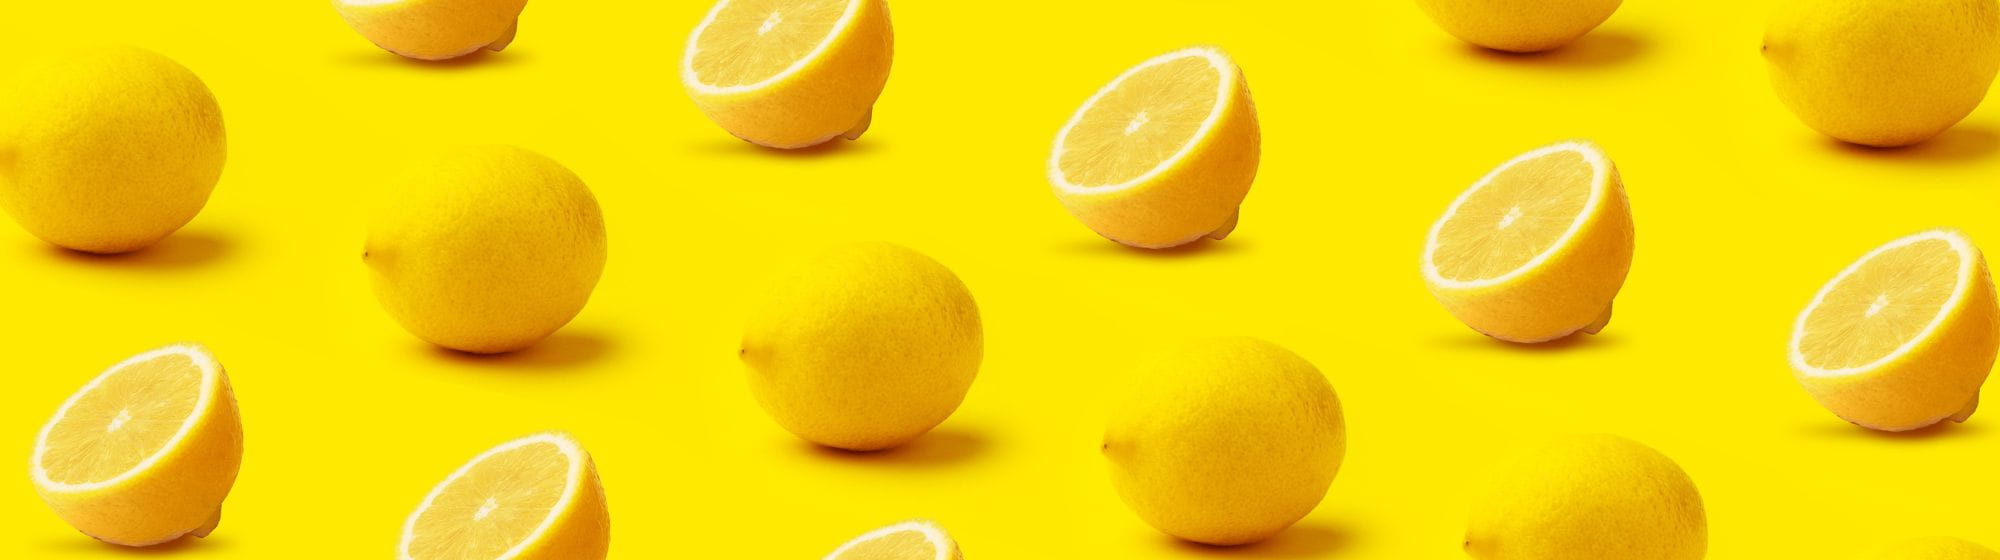 Plusieurs citrons